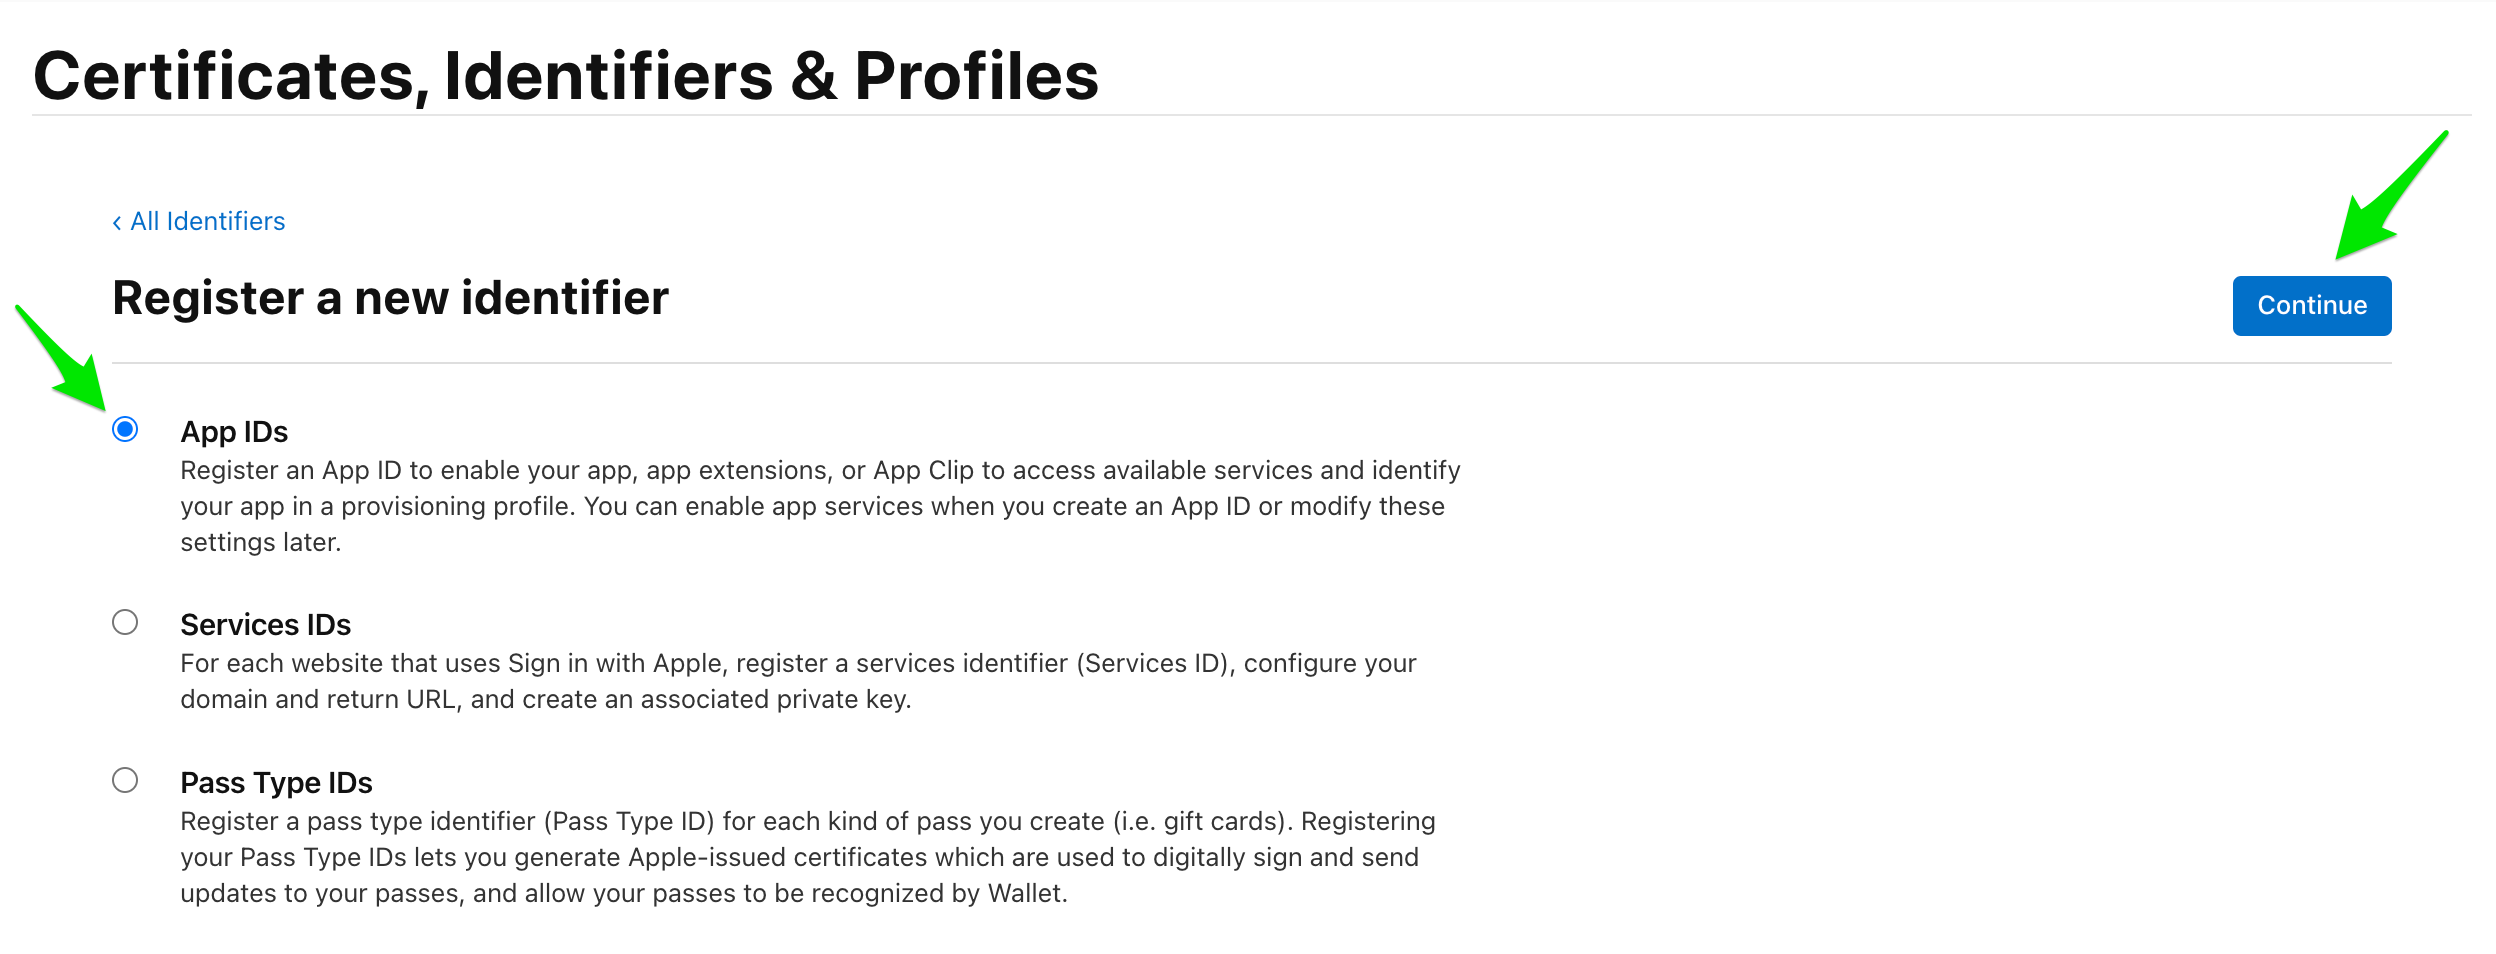 iPhone Developer Connection Portal, Certificates, IDs & Profiles